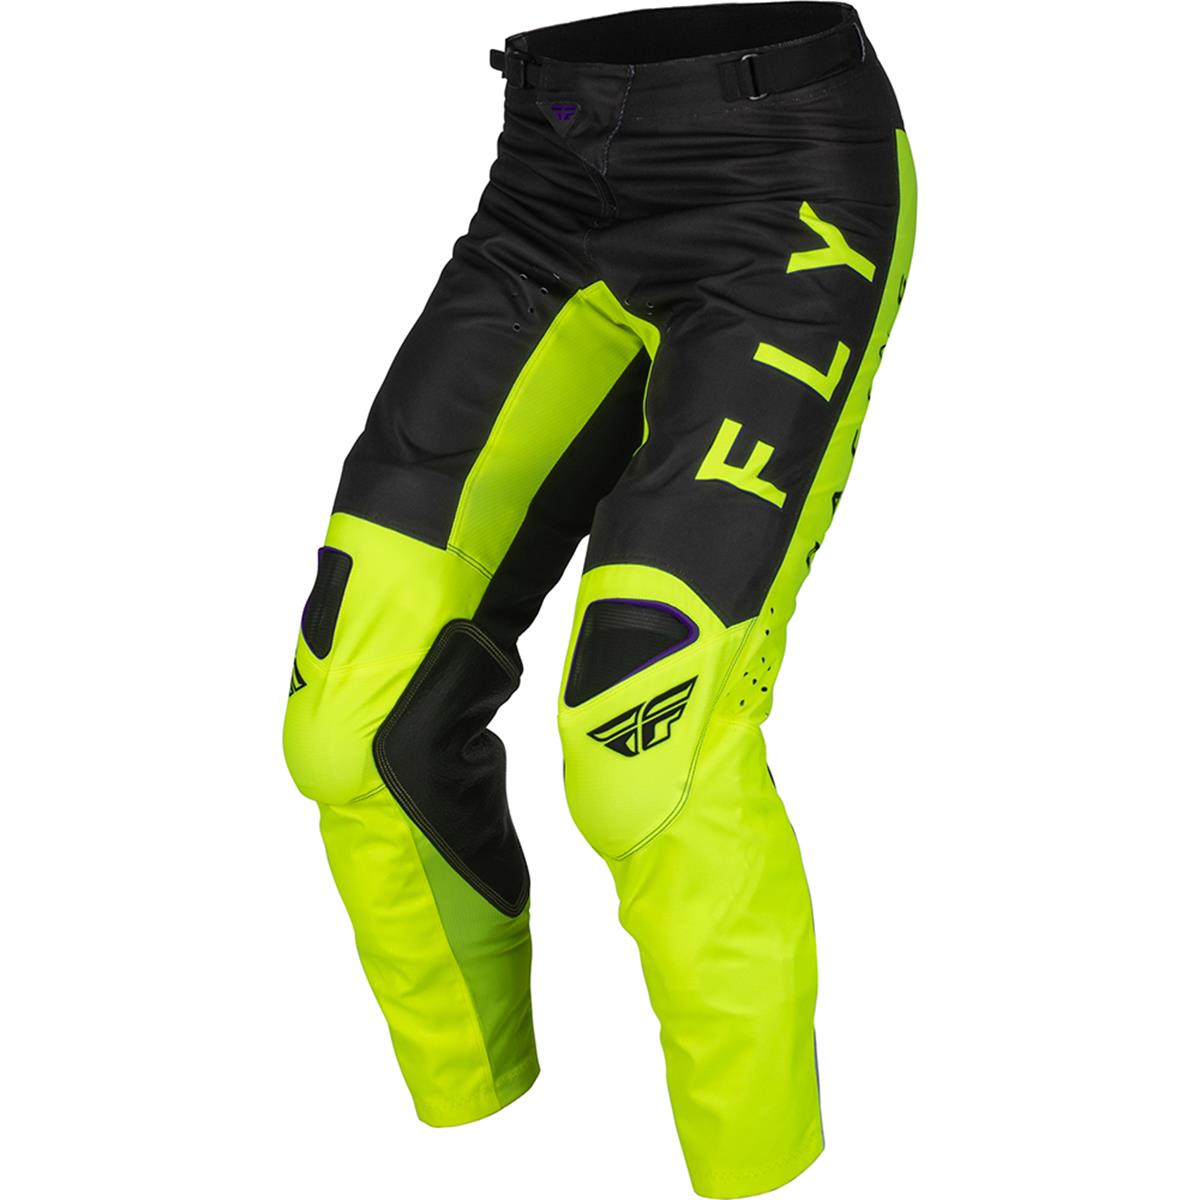 MX Pants Trousers Fly Racing Kinetic Rockstar MotoX OffRoad YellowBlack   eBay